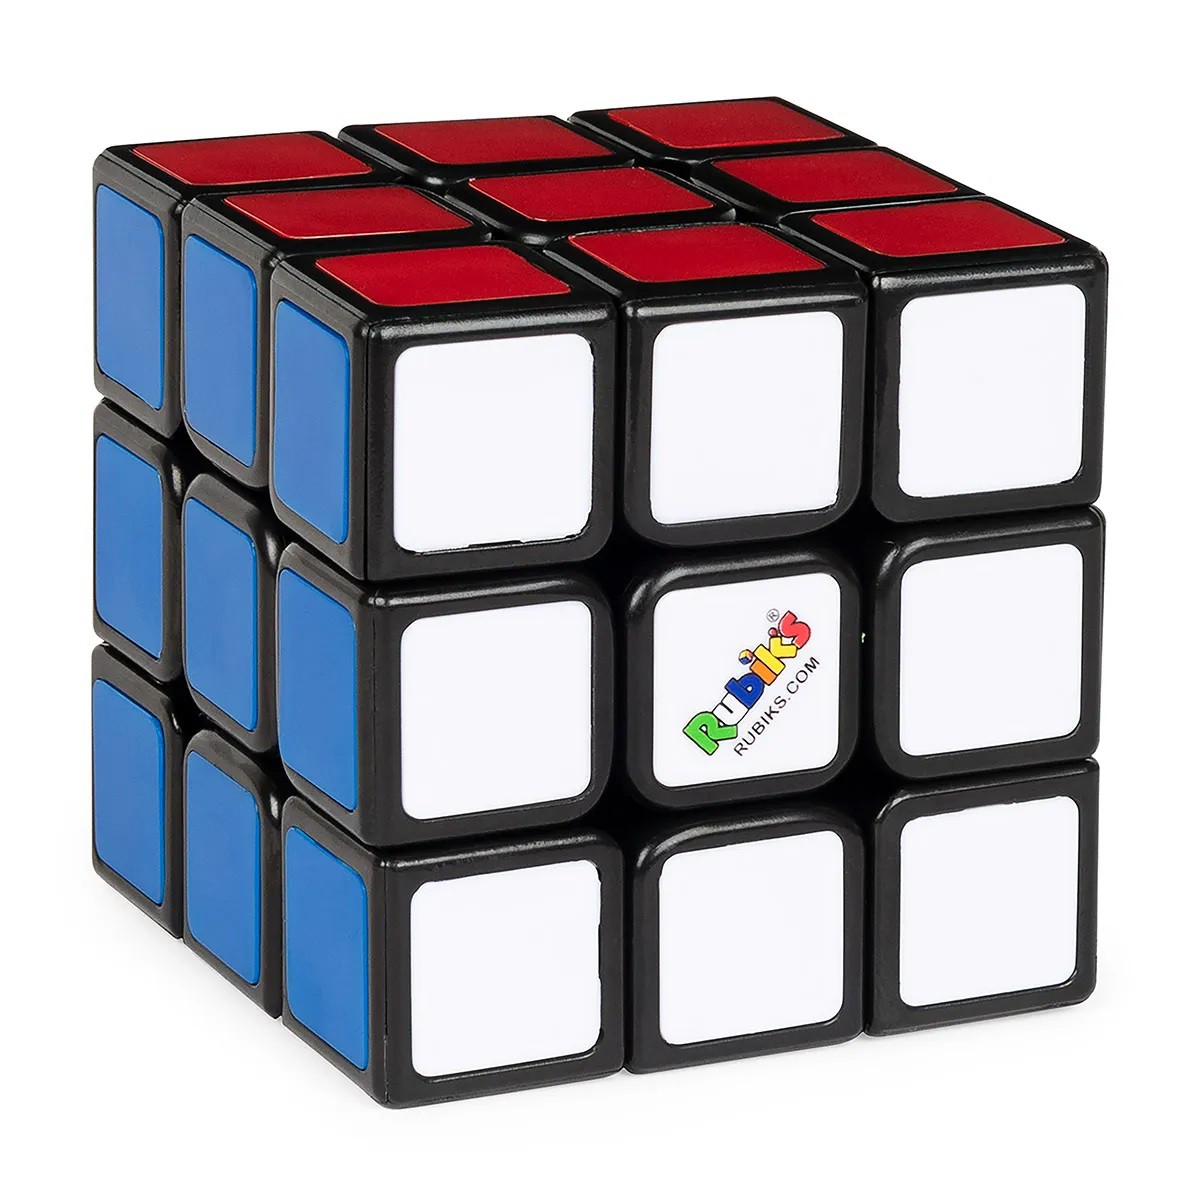 Magnéticos - Cuber Brasil - Loja Oficial do Cubo Mágico Profissional